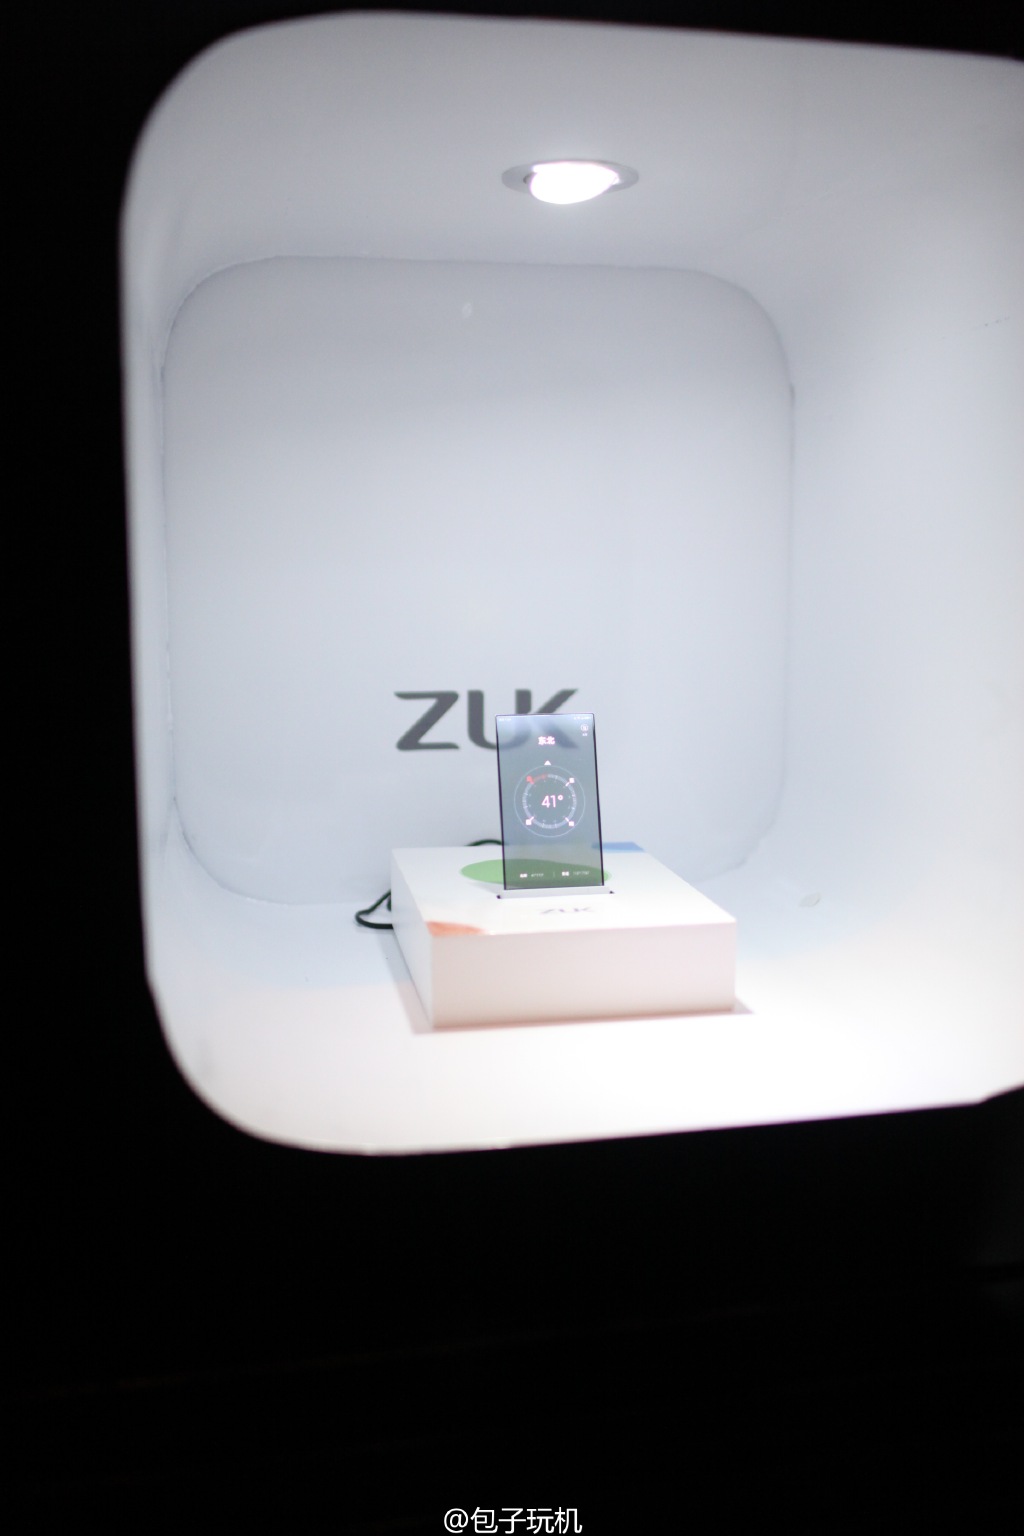 Zuk pamer smartphone dengan layar transparan